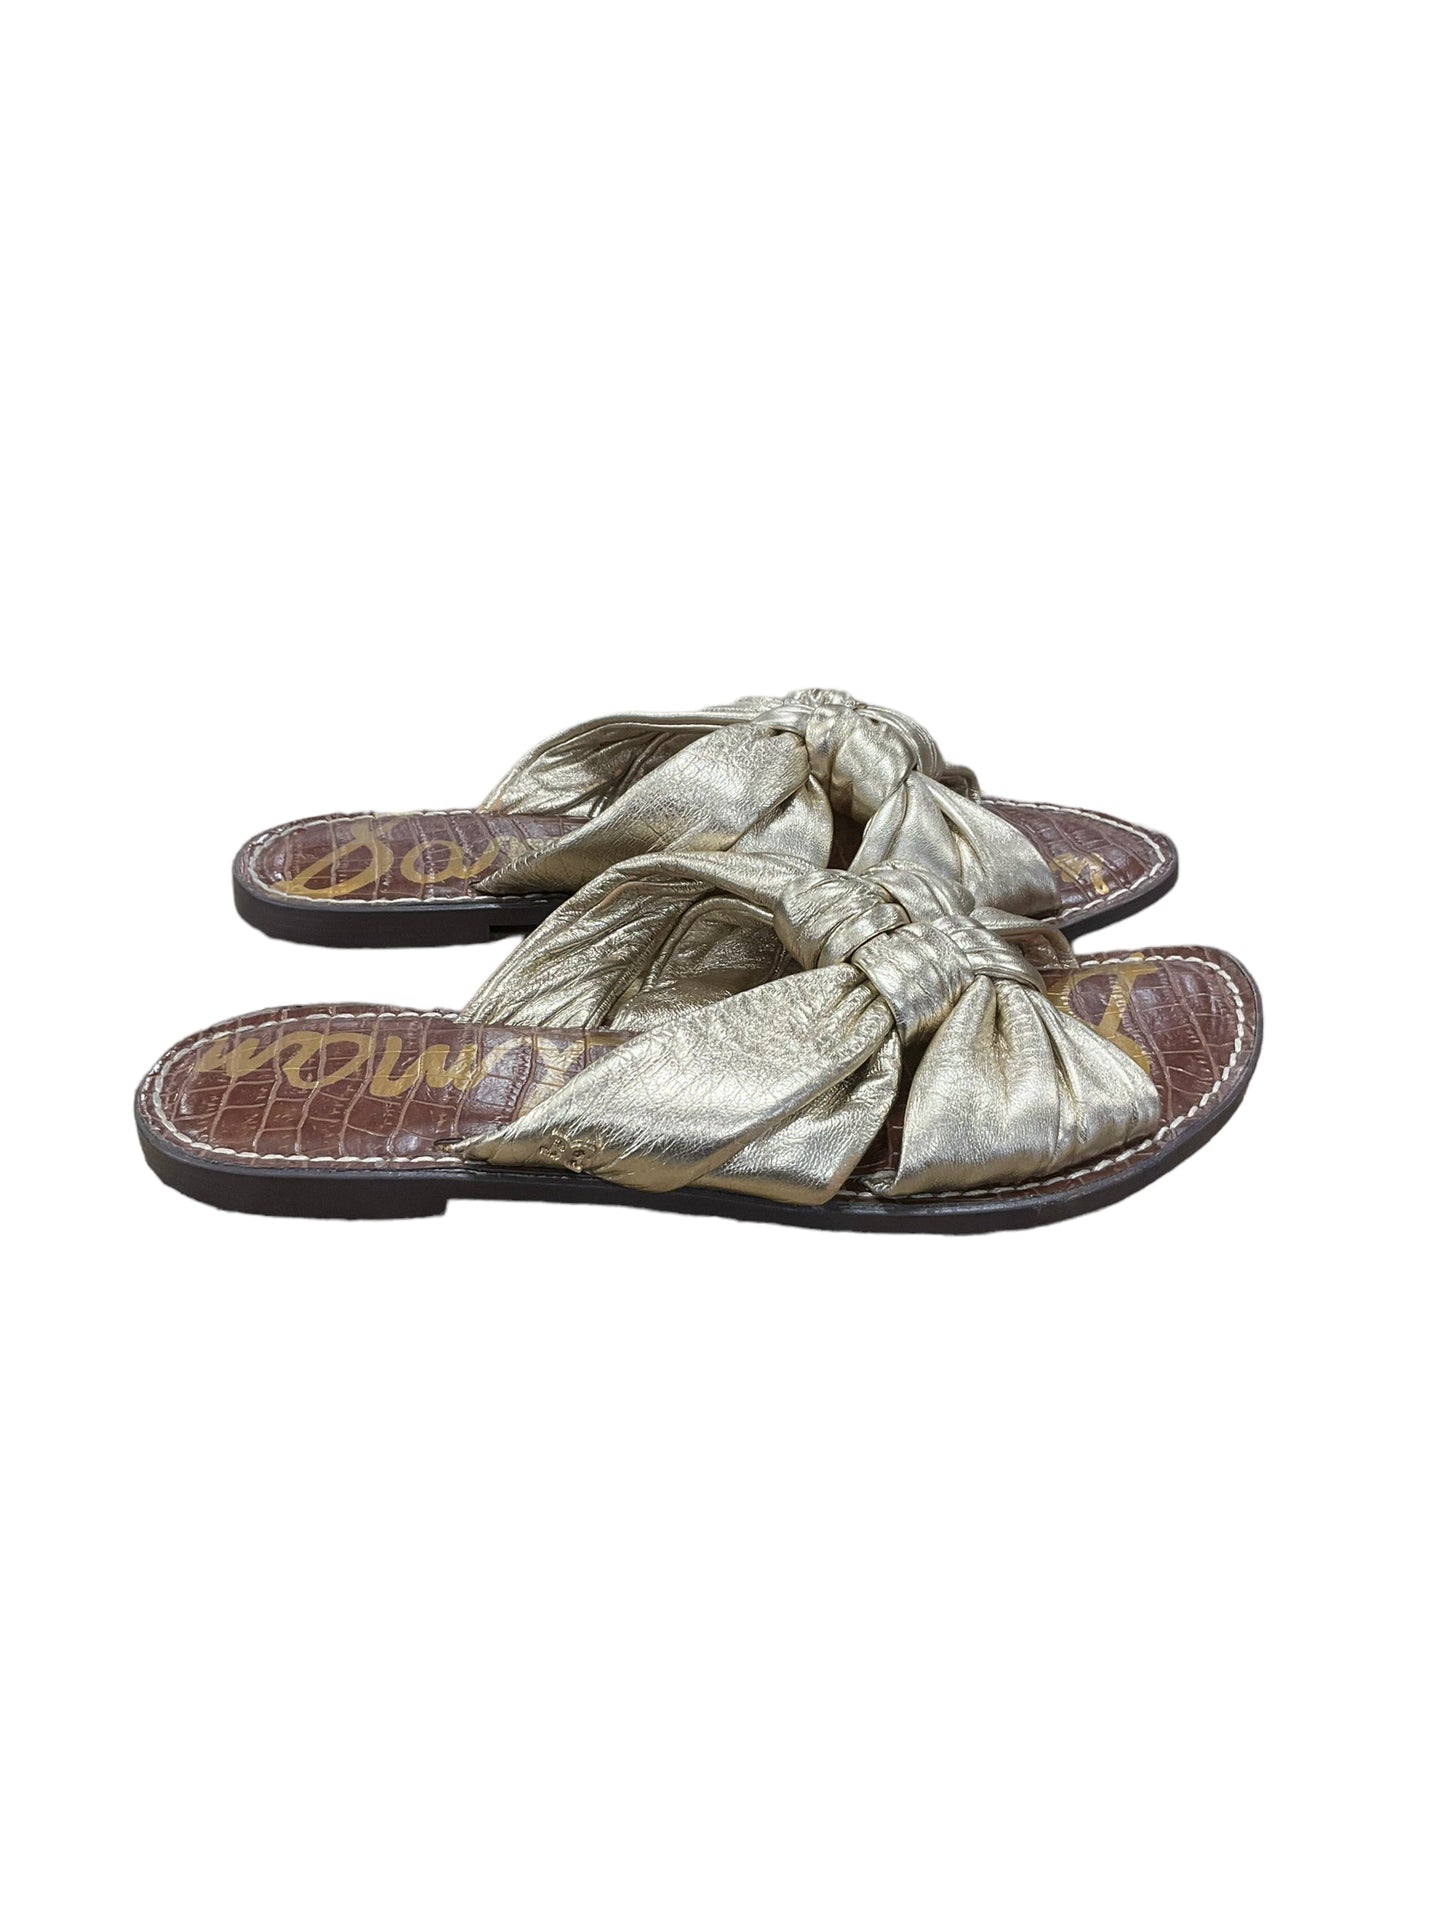 Sandals Flats By Sam Edelman  Size: 9.5